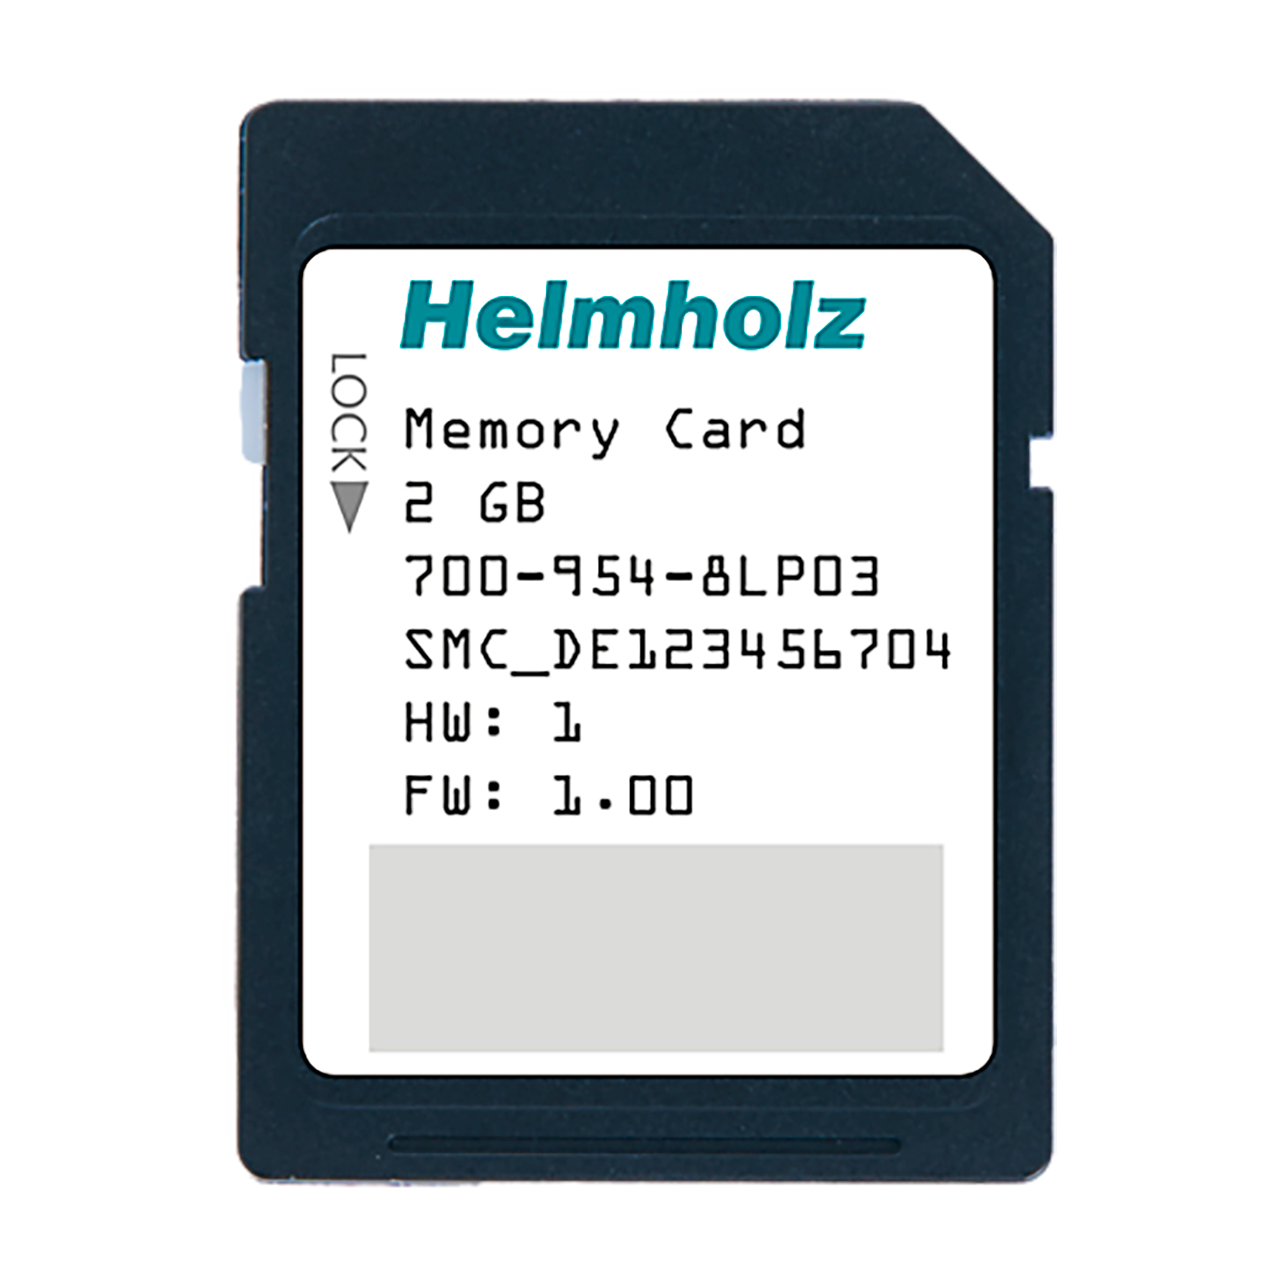 Helmholz Tarjeta de Memoria para S7-1200 / S7-1500, 2 GByte 700-954-8LP03